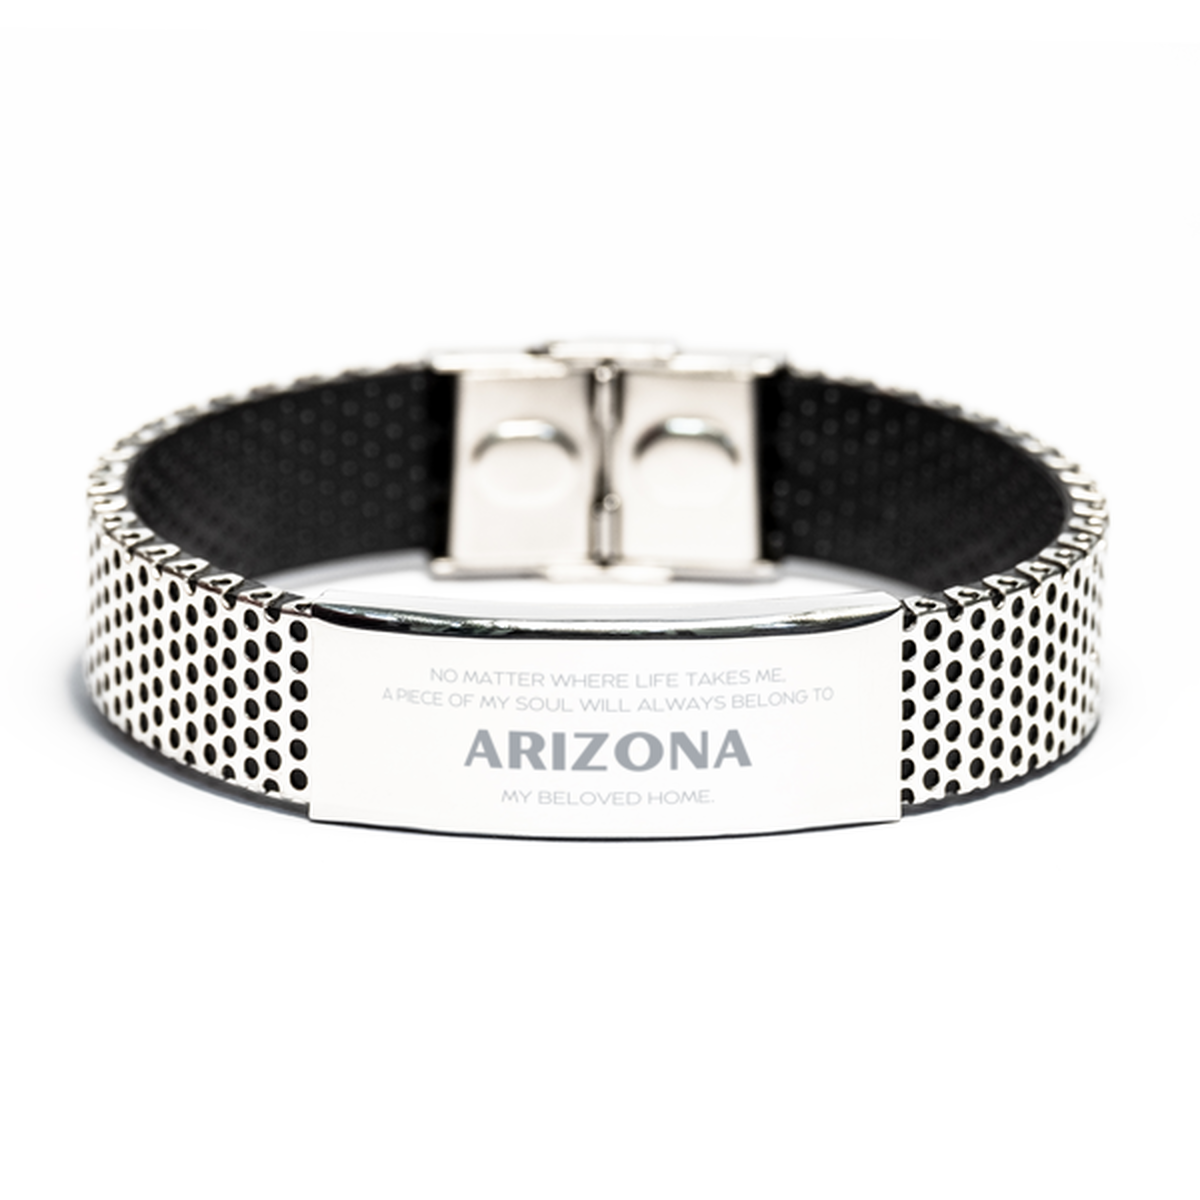 Love Arizona State Gifts, My soul will always belong to Arizona, Proud Stainless Steel Bracelet, Birthday Unique Gifts For Arizona Men, Women, Friends